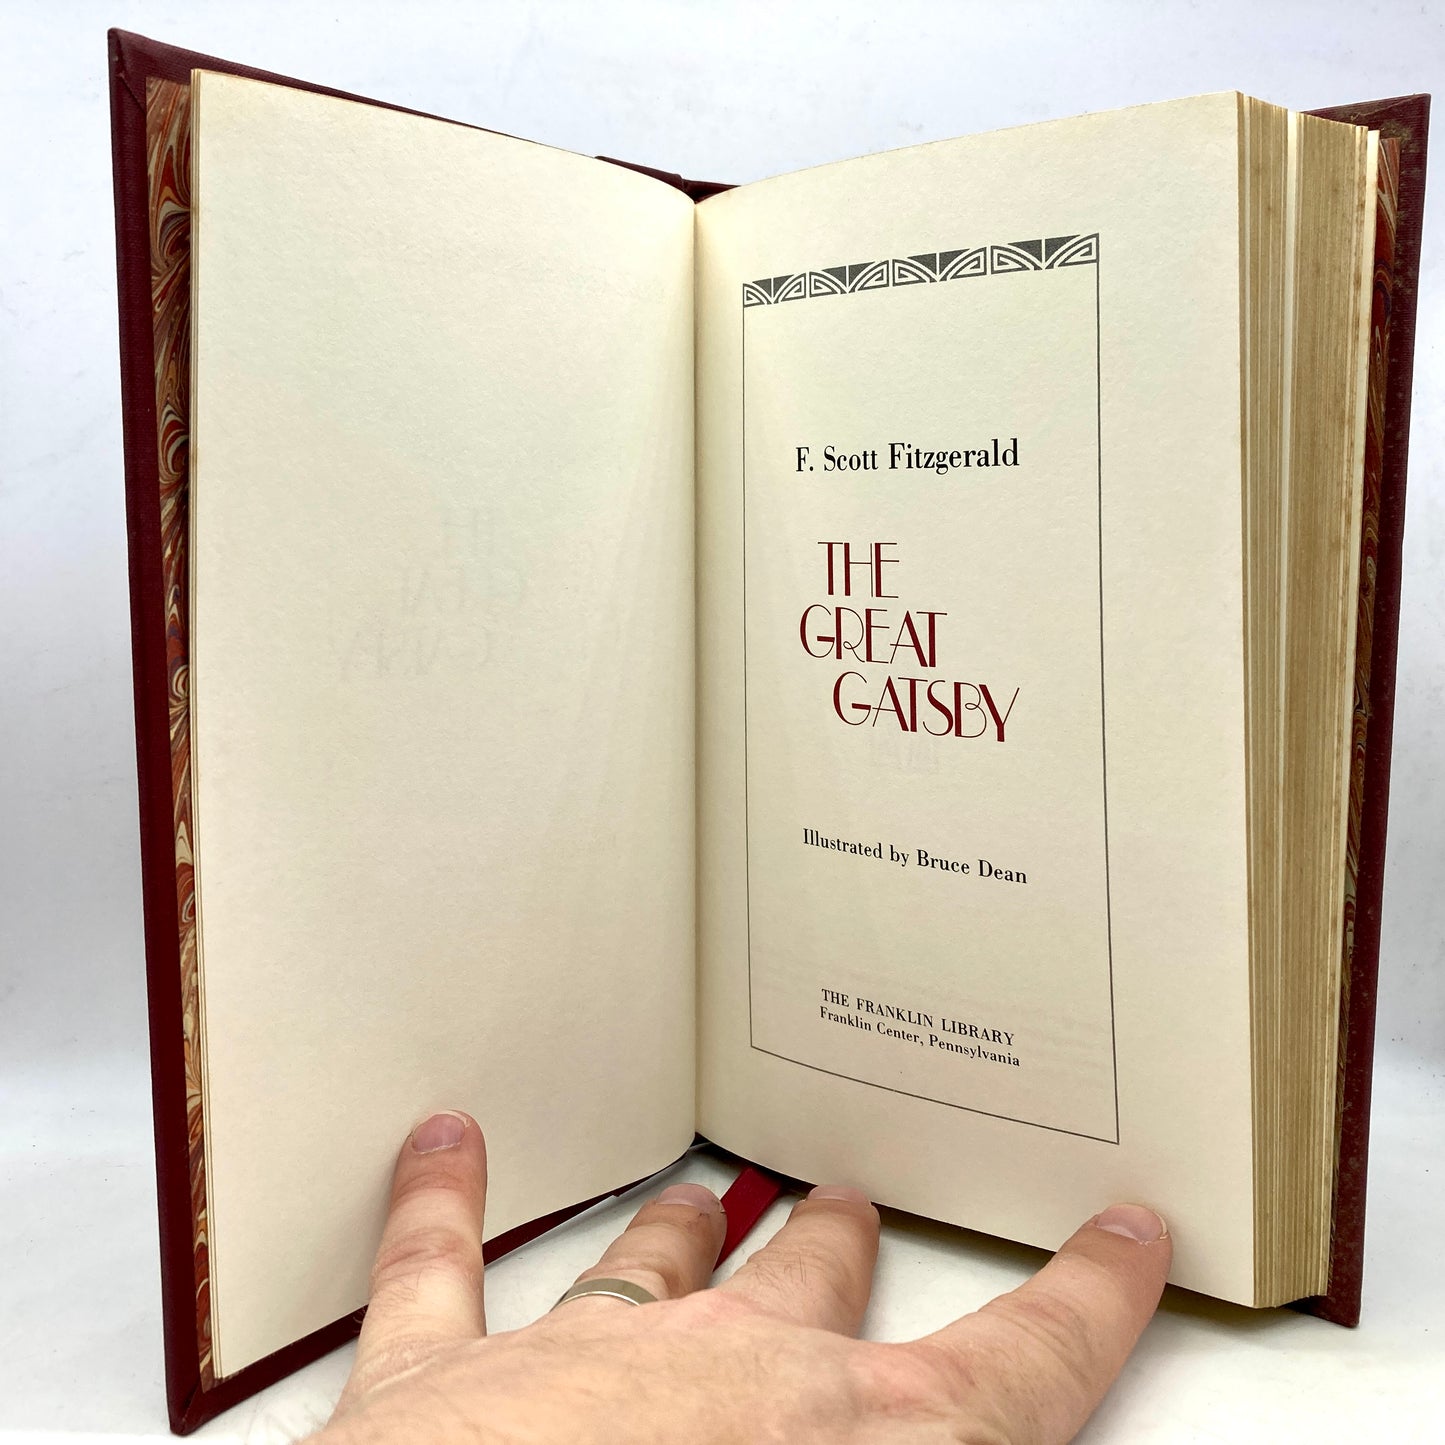 FITZGERALD, F. Scott "The Great Gatsby" [Franklin Library, 1982]